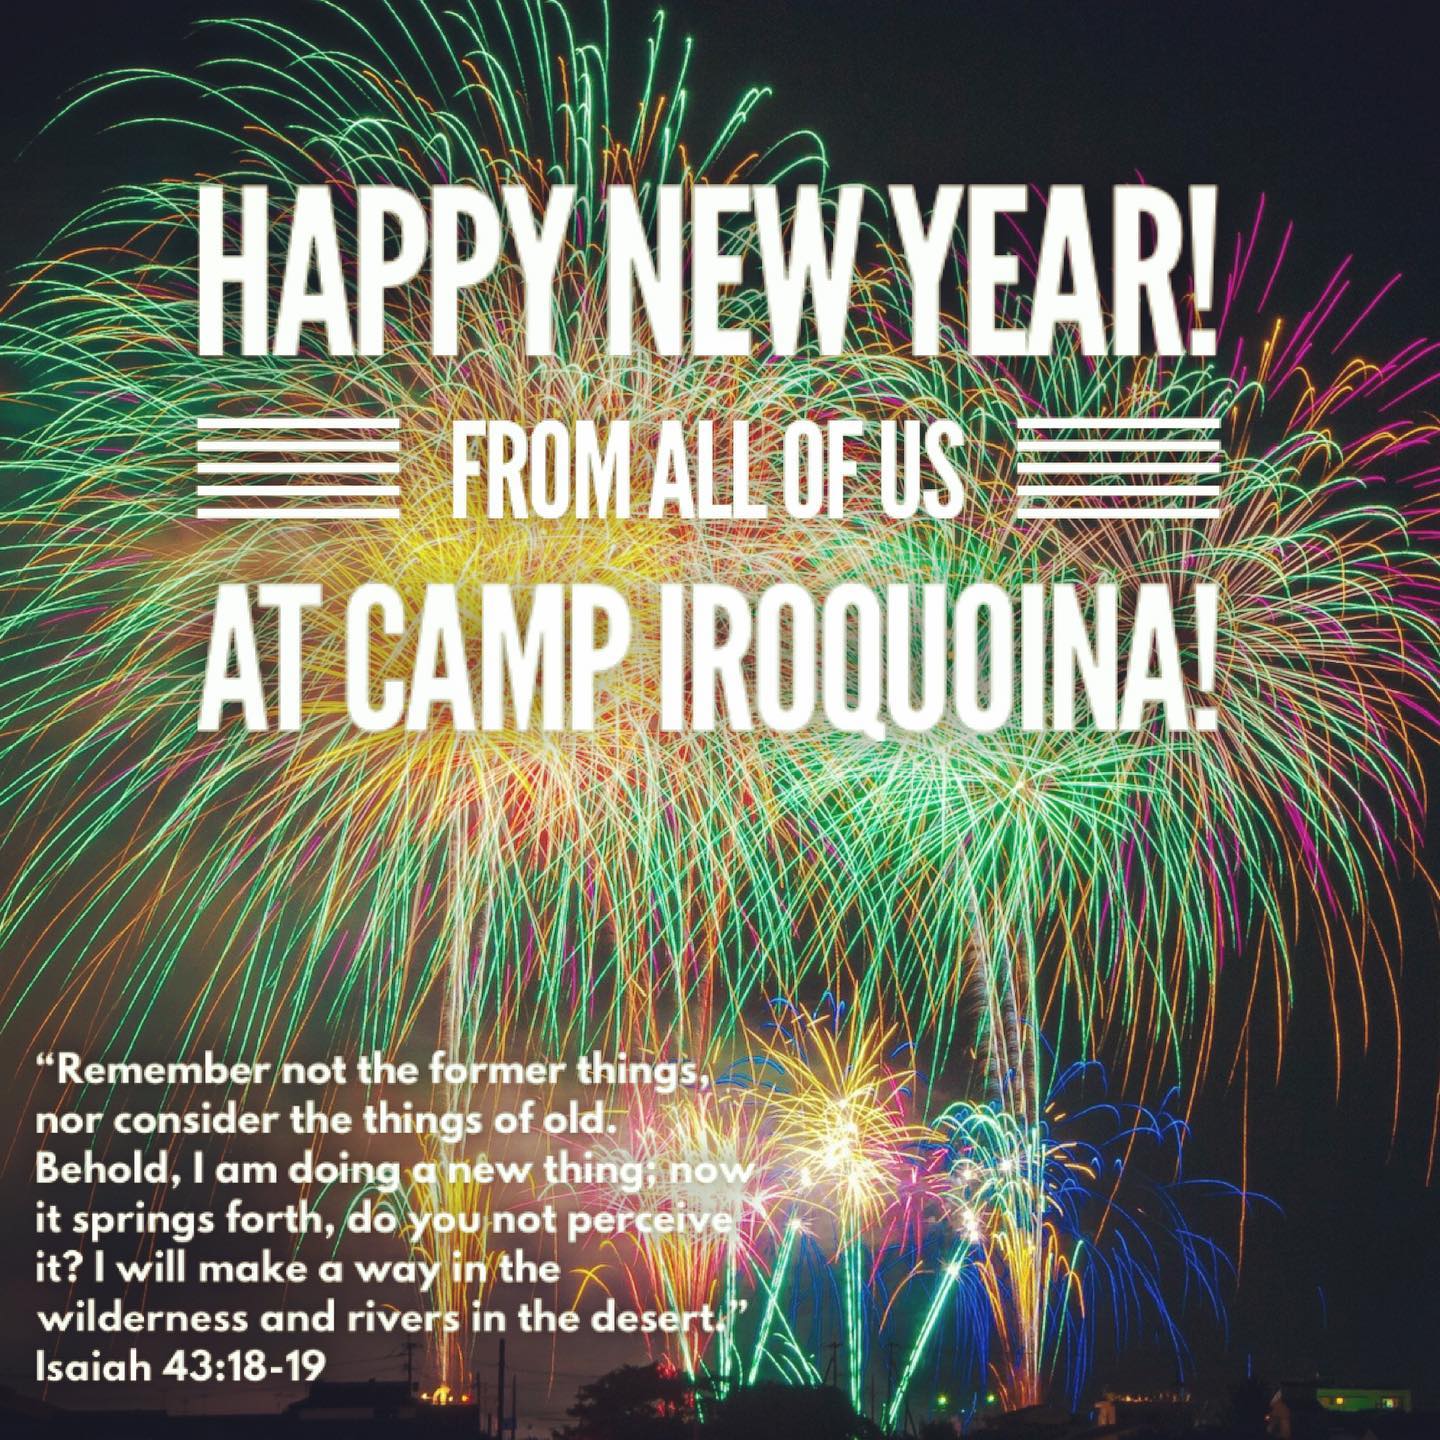 Happy New Year from Camp Iroquoina! #happynewyear2020 #2020 #happynewyear #campiroquoina